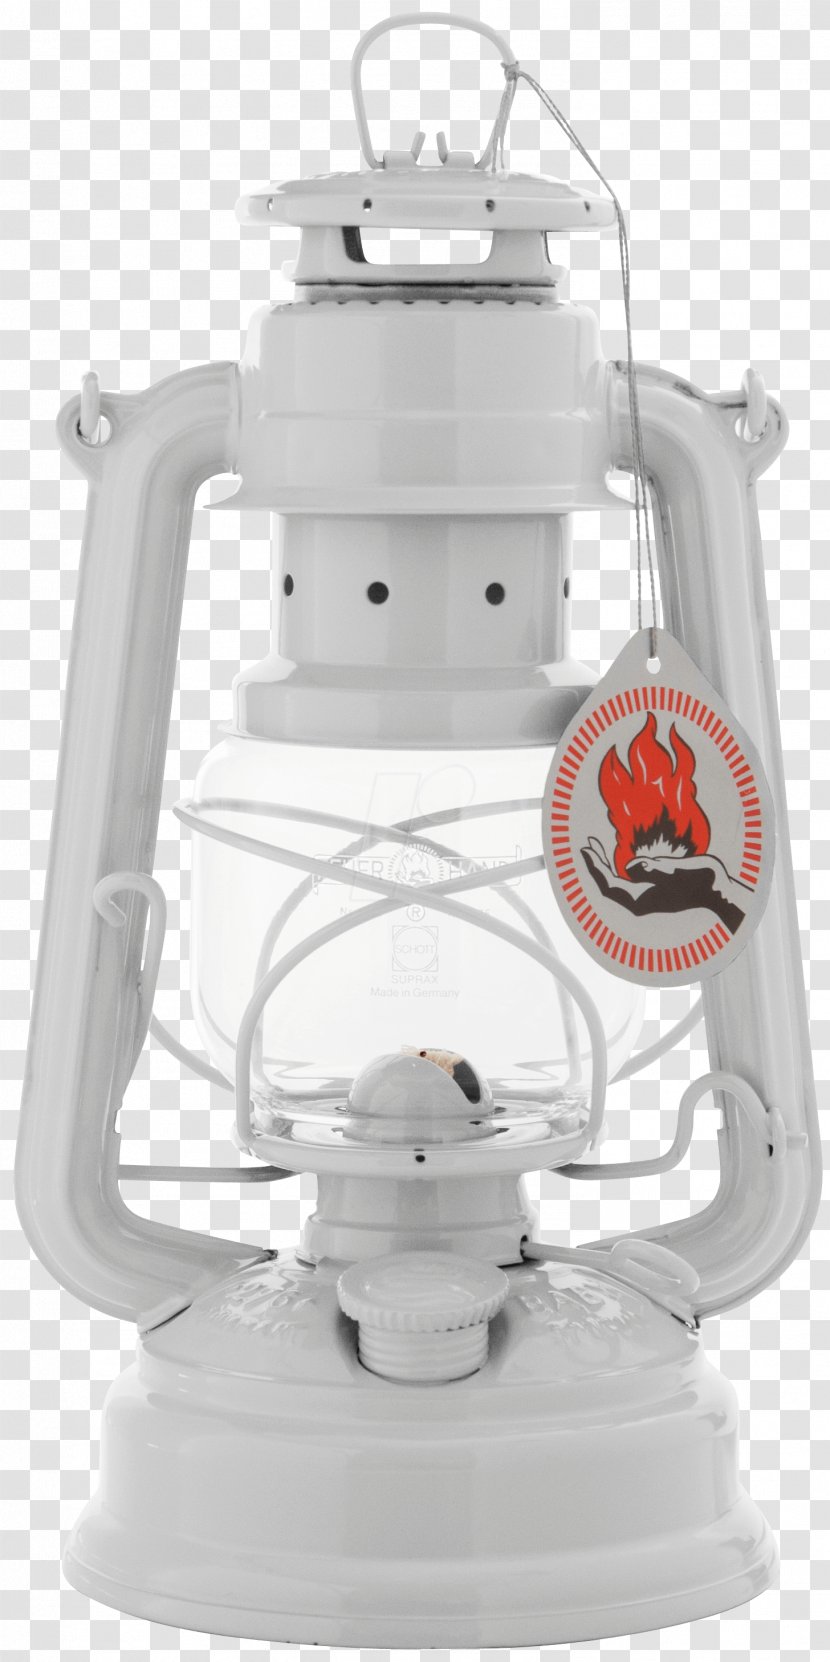 Feuer Hand 276 Lantern - Small Appliance - Jet Black Feuerhand Kerosene Lamp Oil Transparent PNG